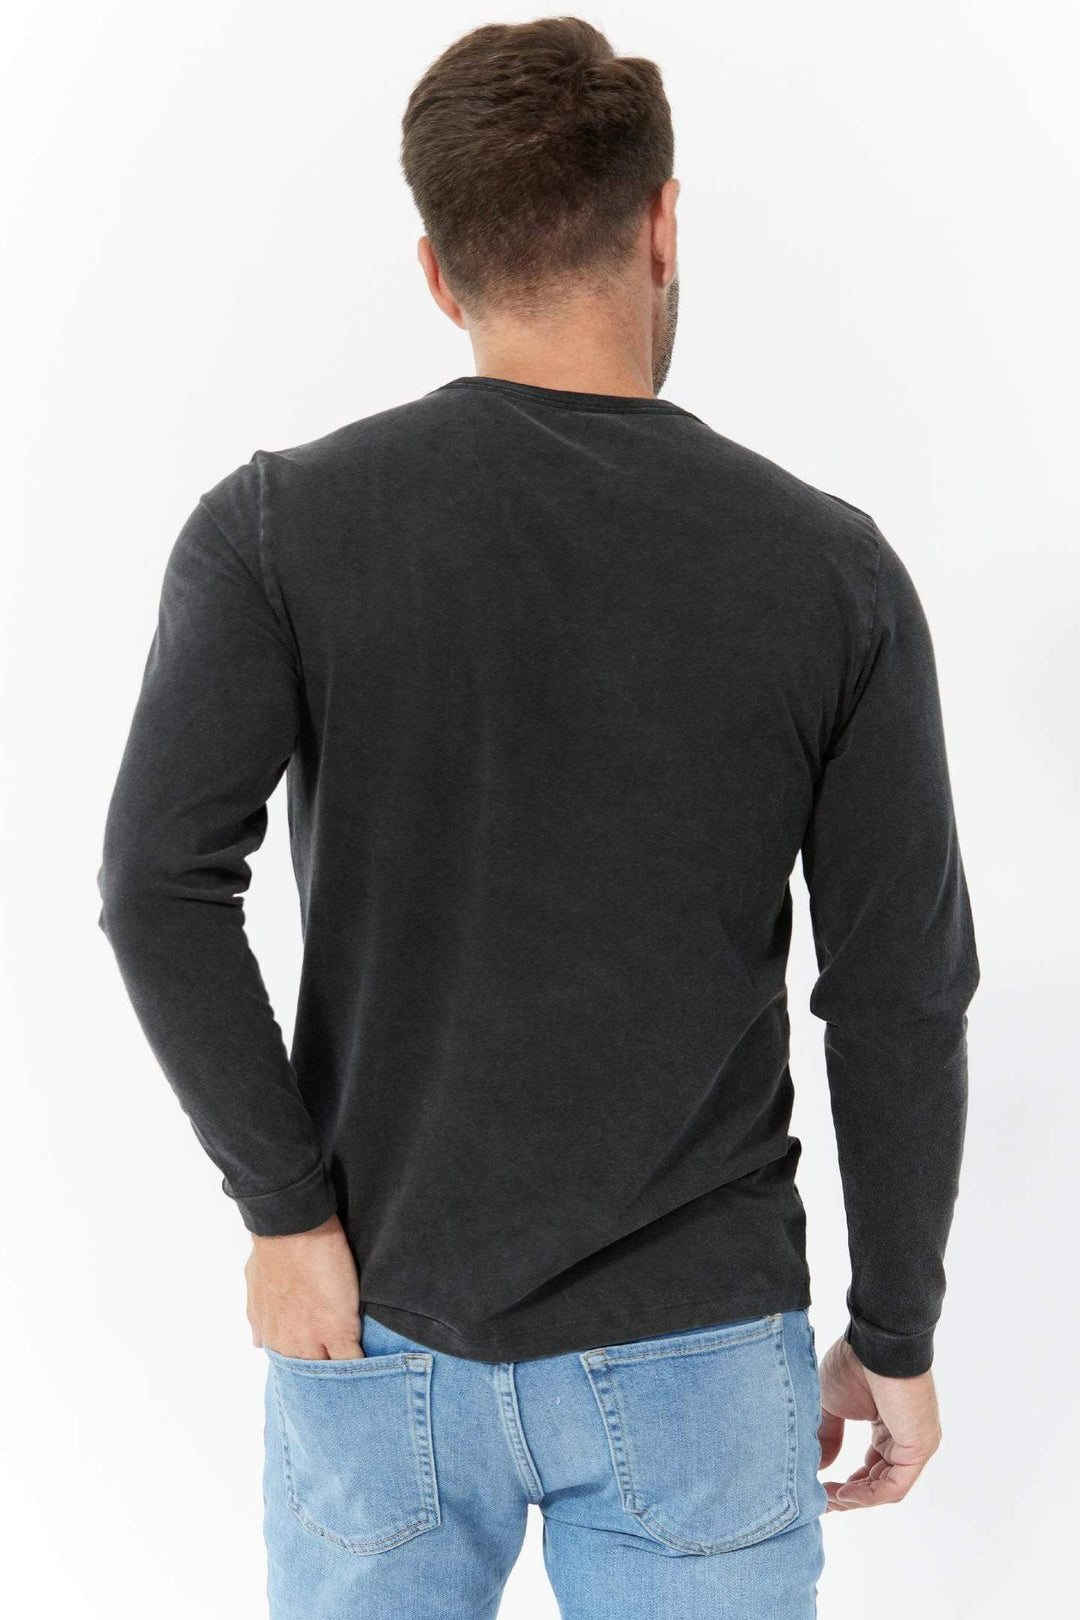 Buy Black Long Sleeve Pima Cotton Crew Neck Tee for Short Men | Ash & Erie   T-Shirts